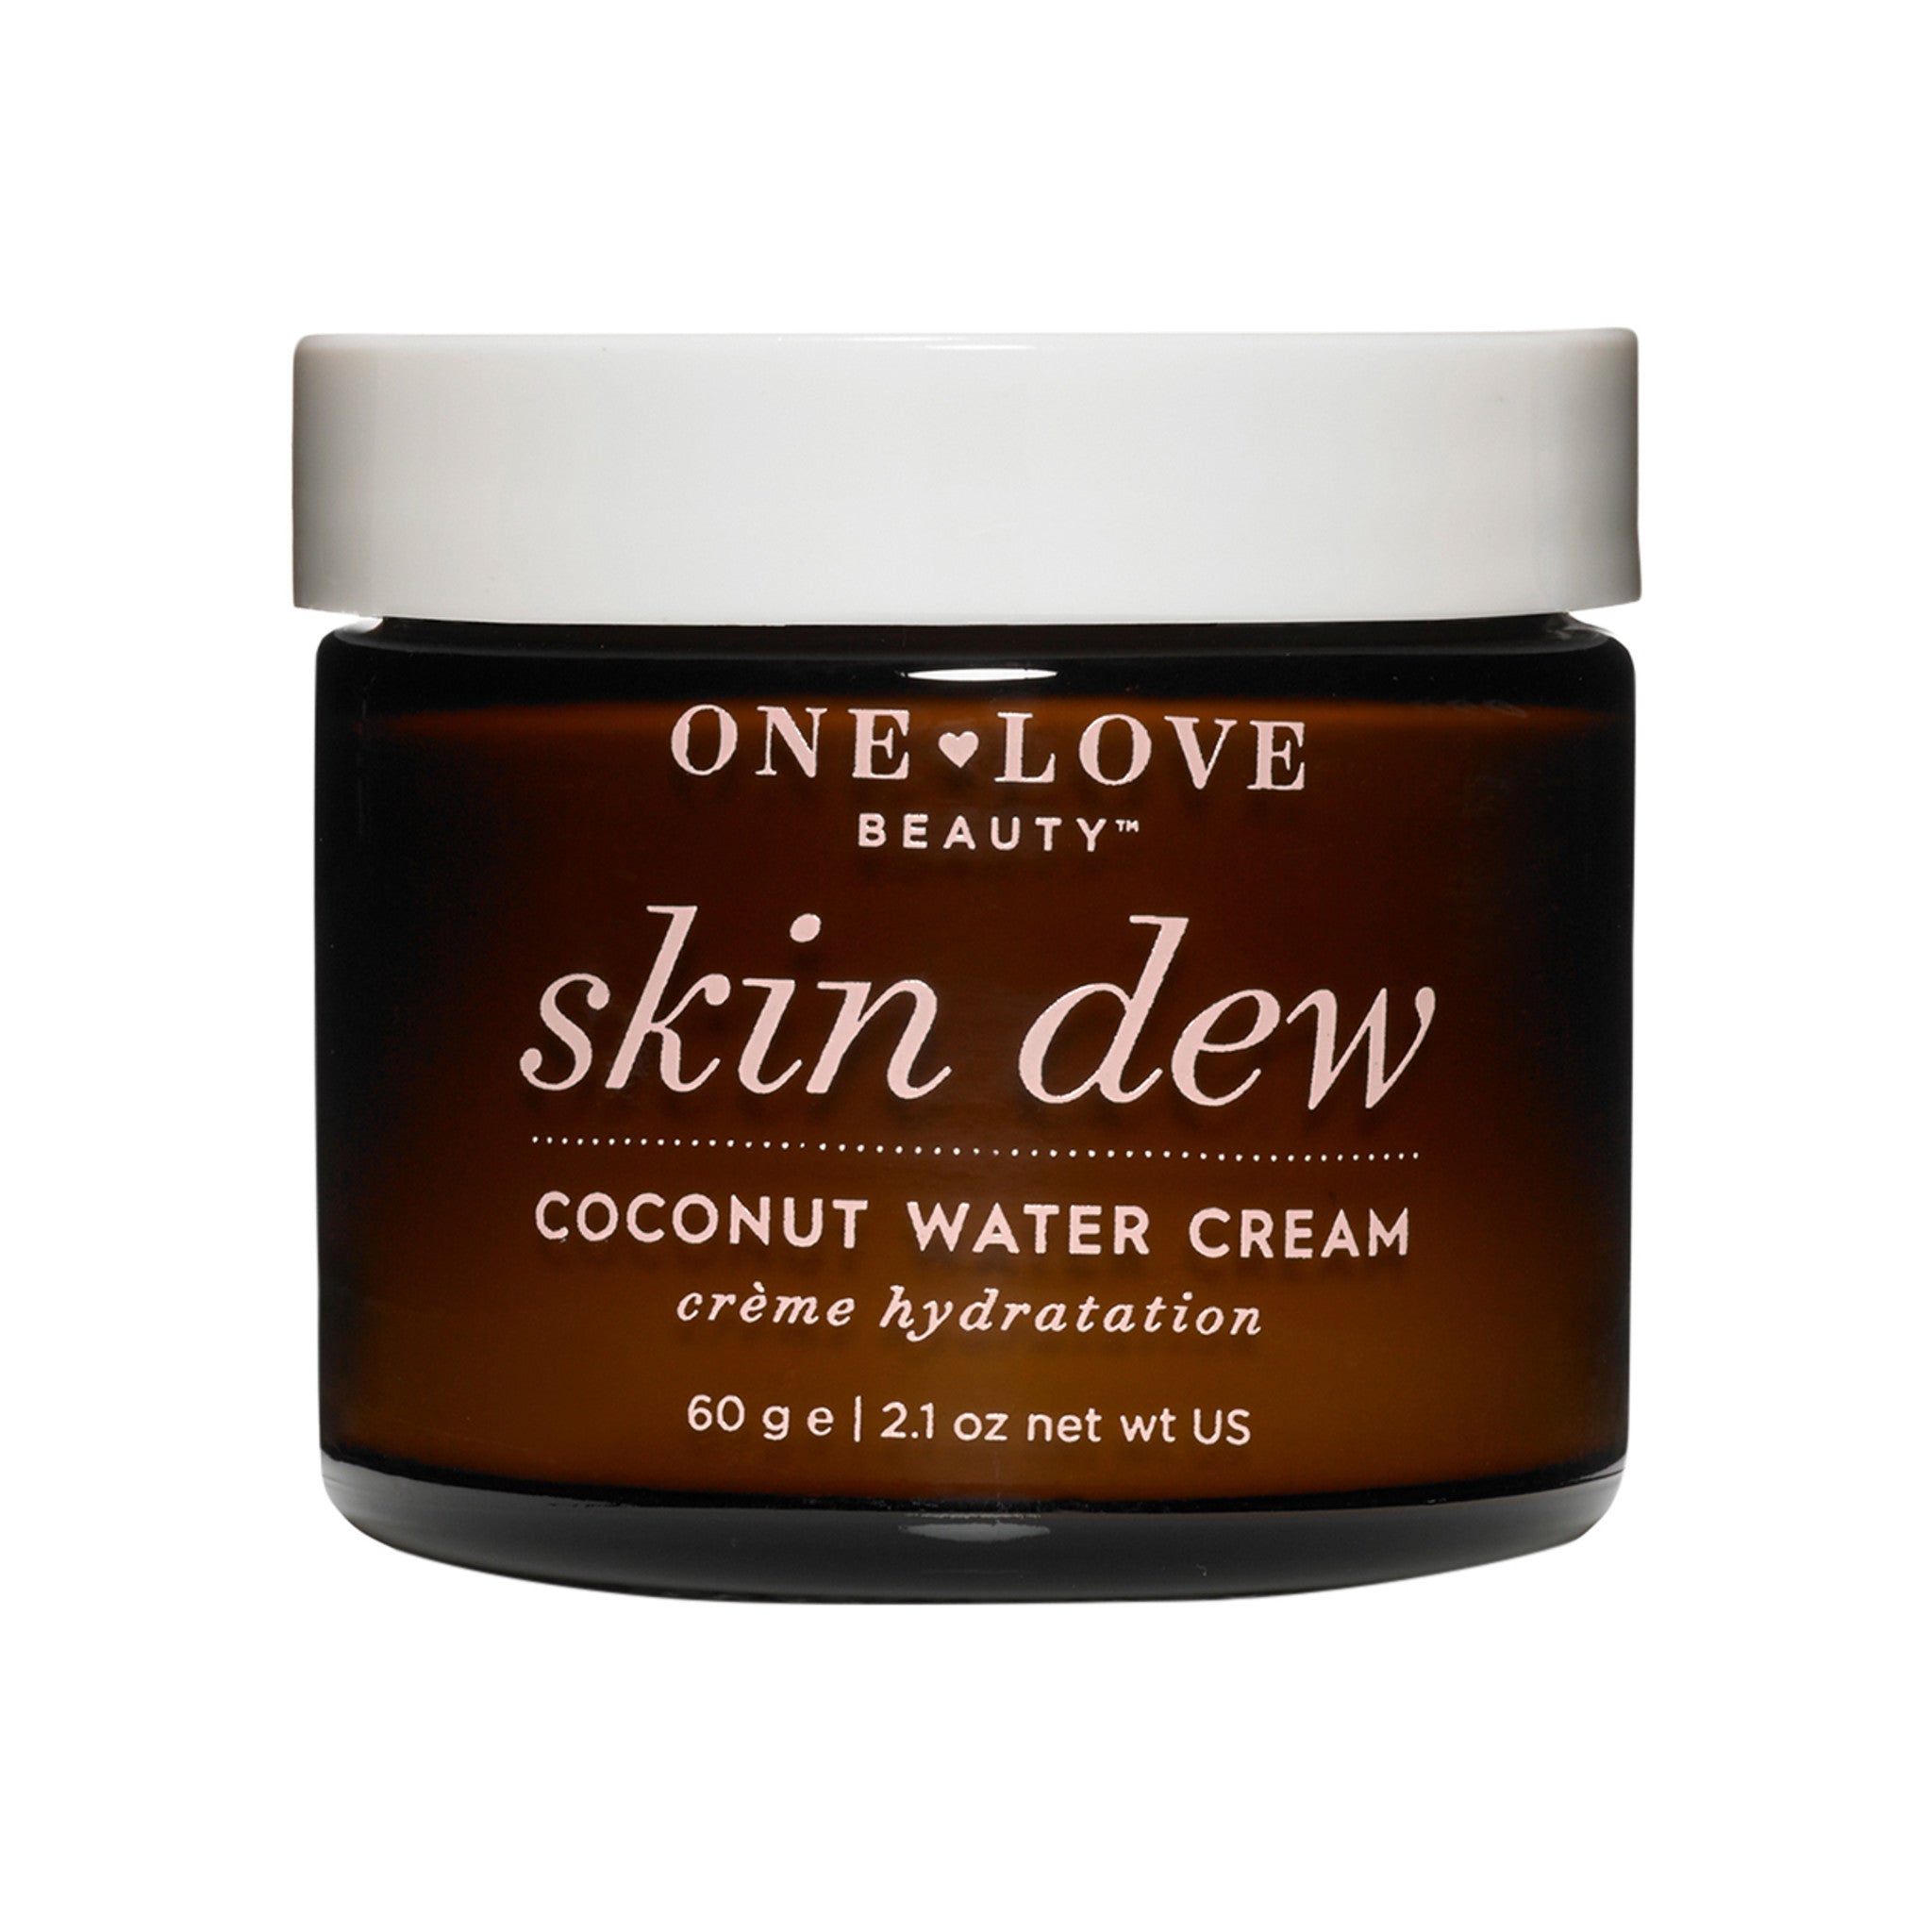 One Love Organics Skin Dew Coconut Water Cream main image.